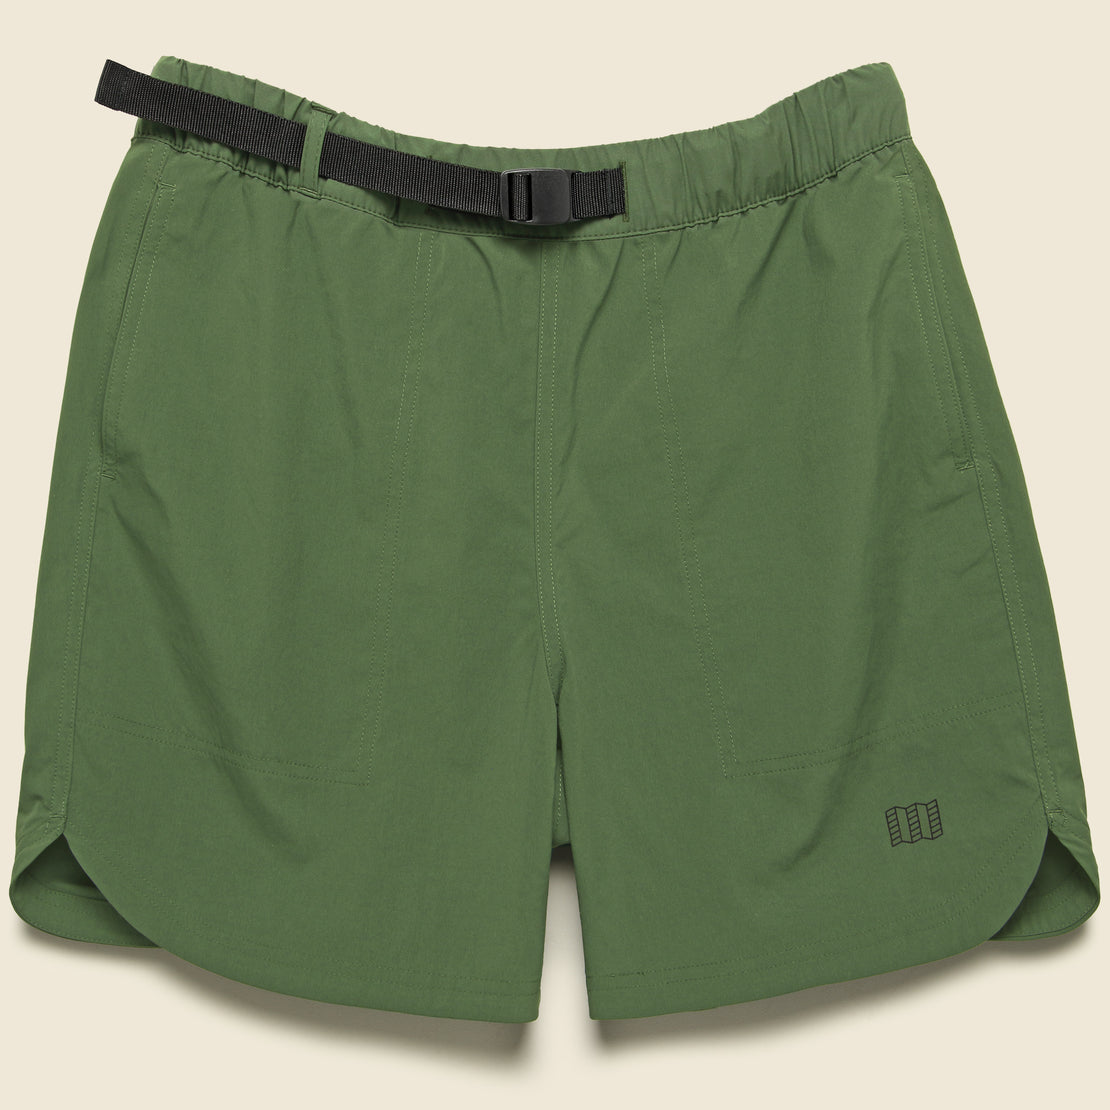 River Shorts Lightweight - Olive